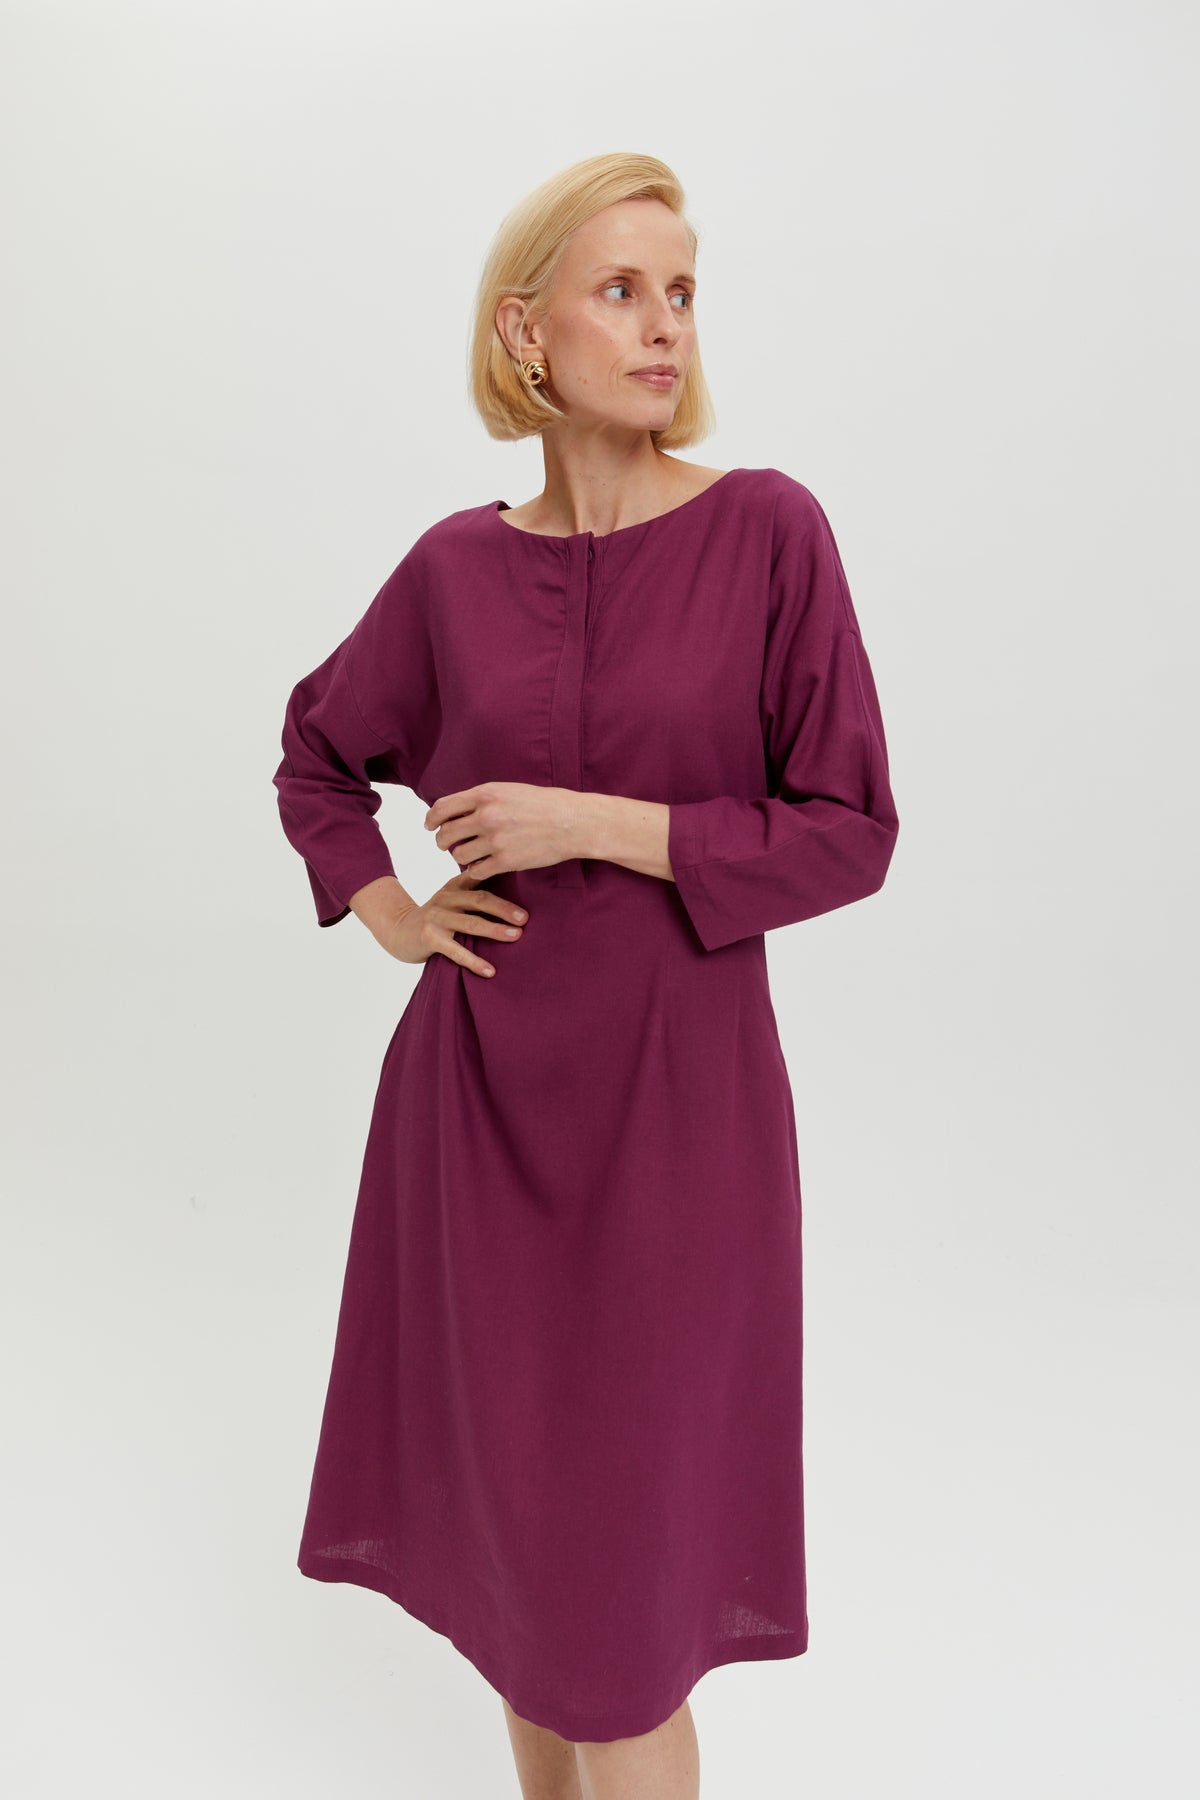 Lusin | Linen button-down midi dress in purple by Ayani